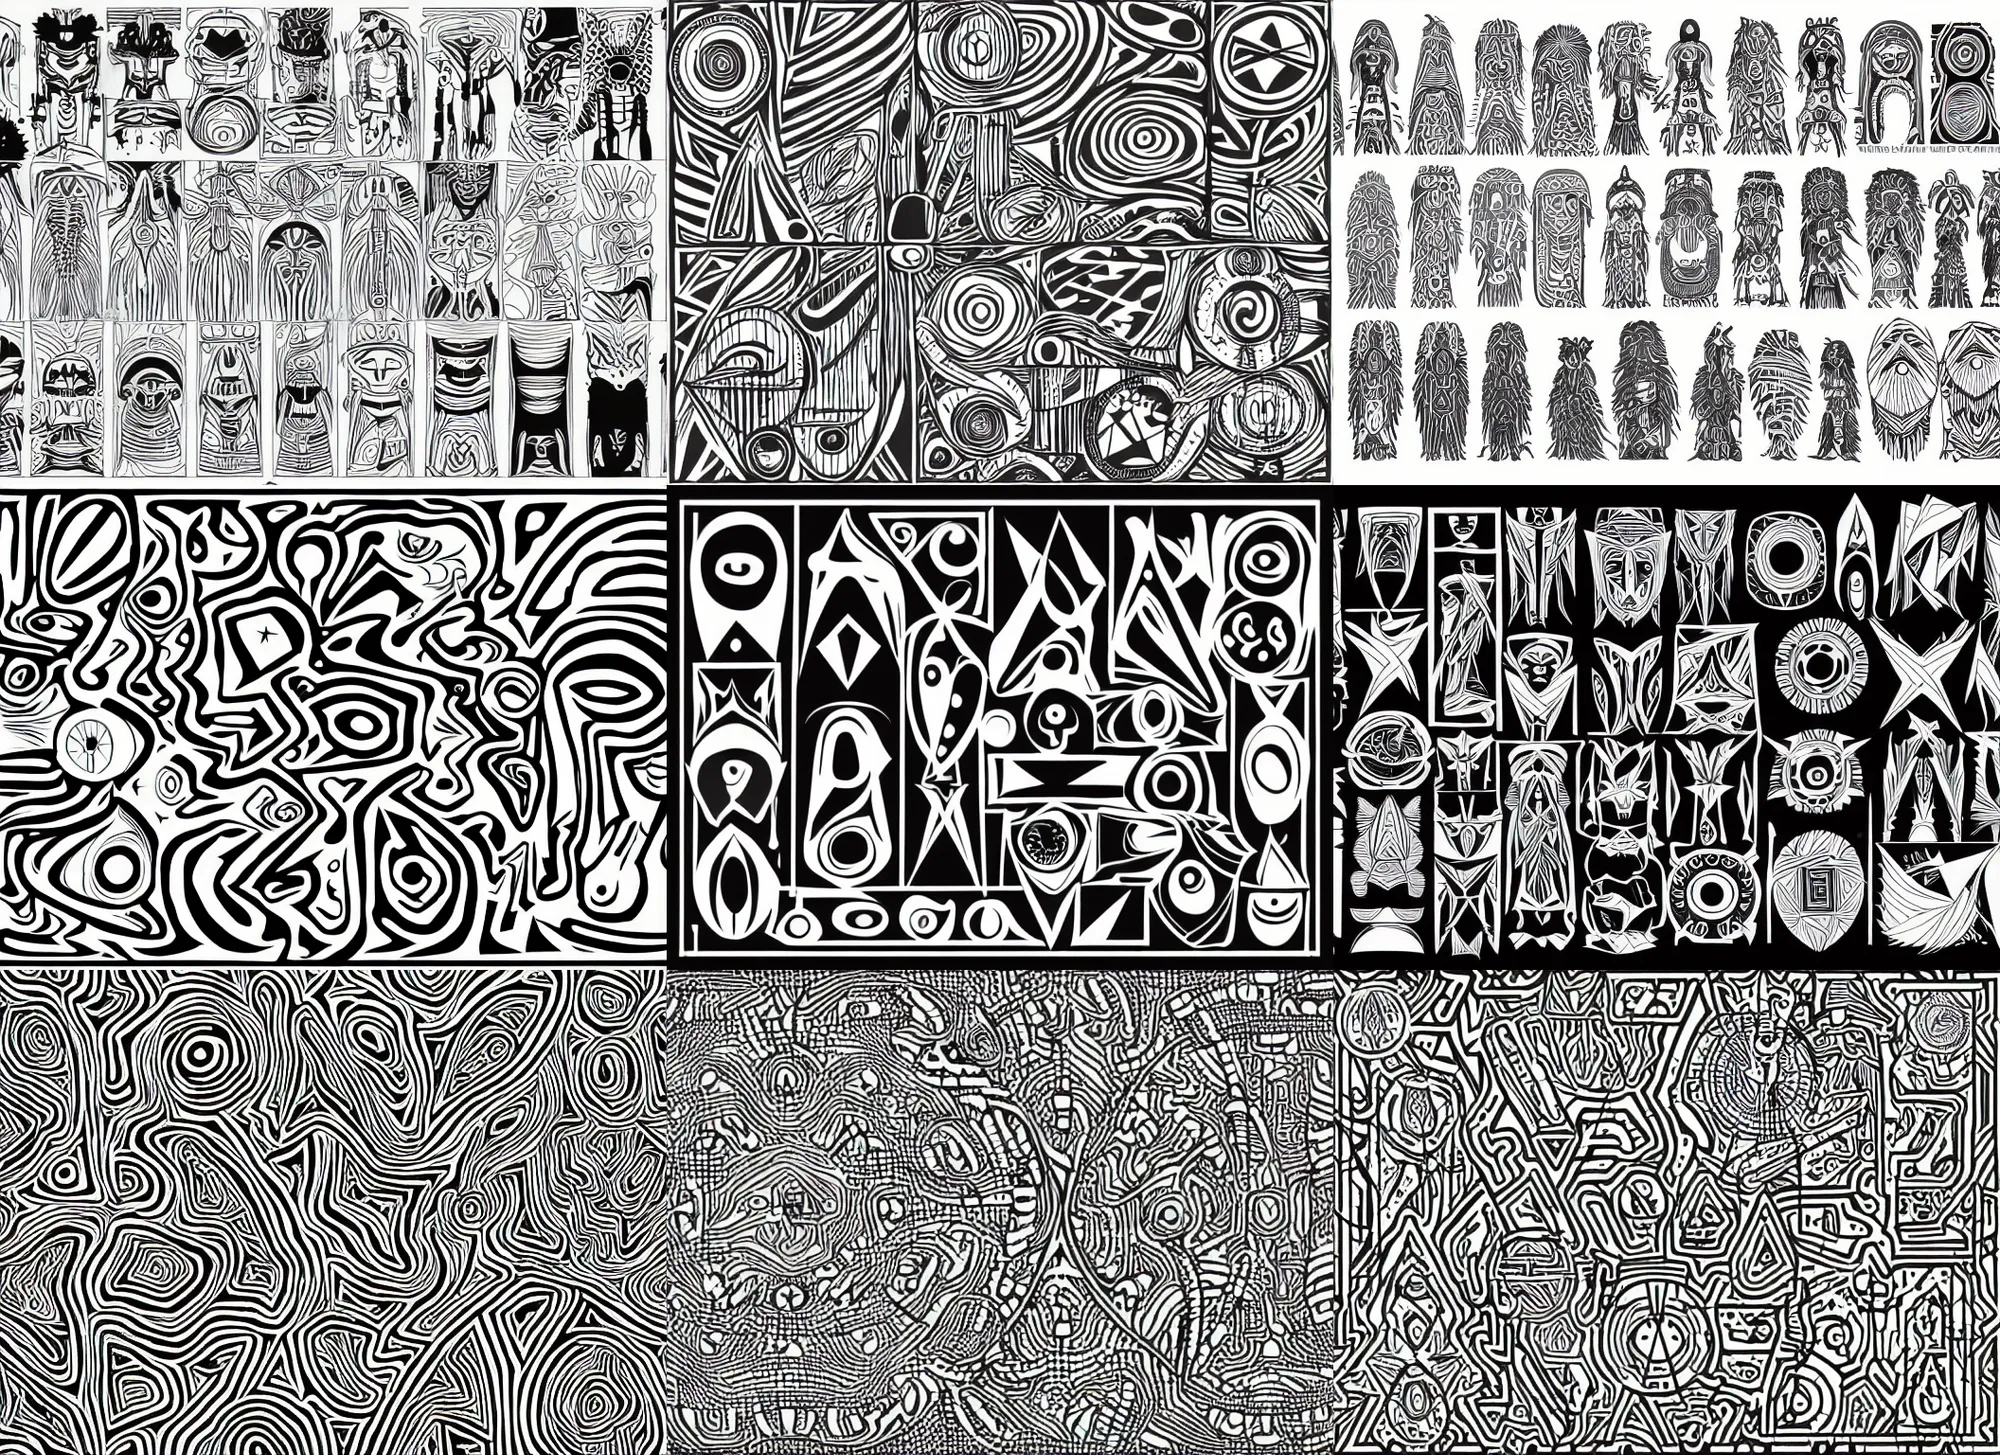 Prompt: tribal aboriginal clean shapes by bauhaus, moebius, sprite sheet, b & w, vector